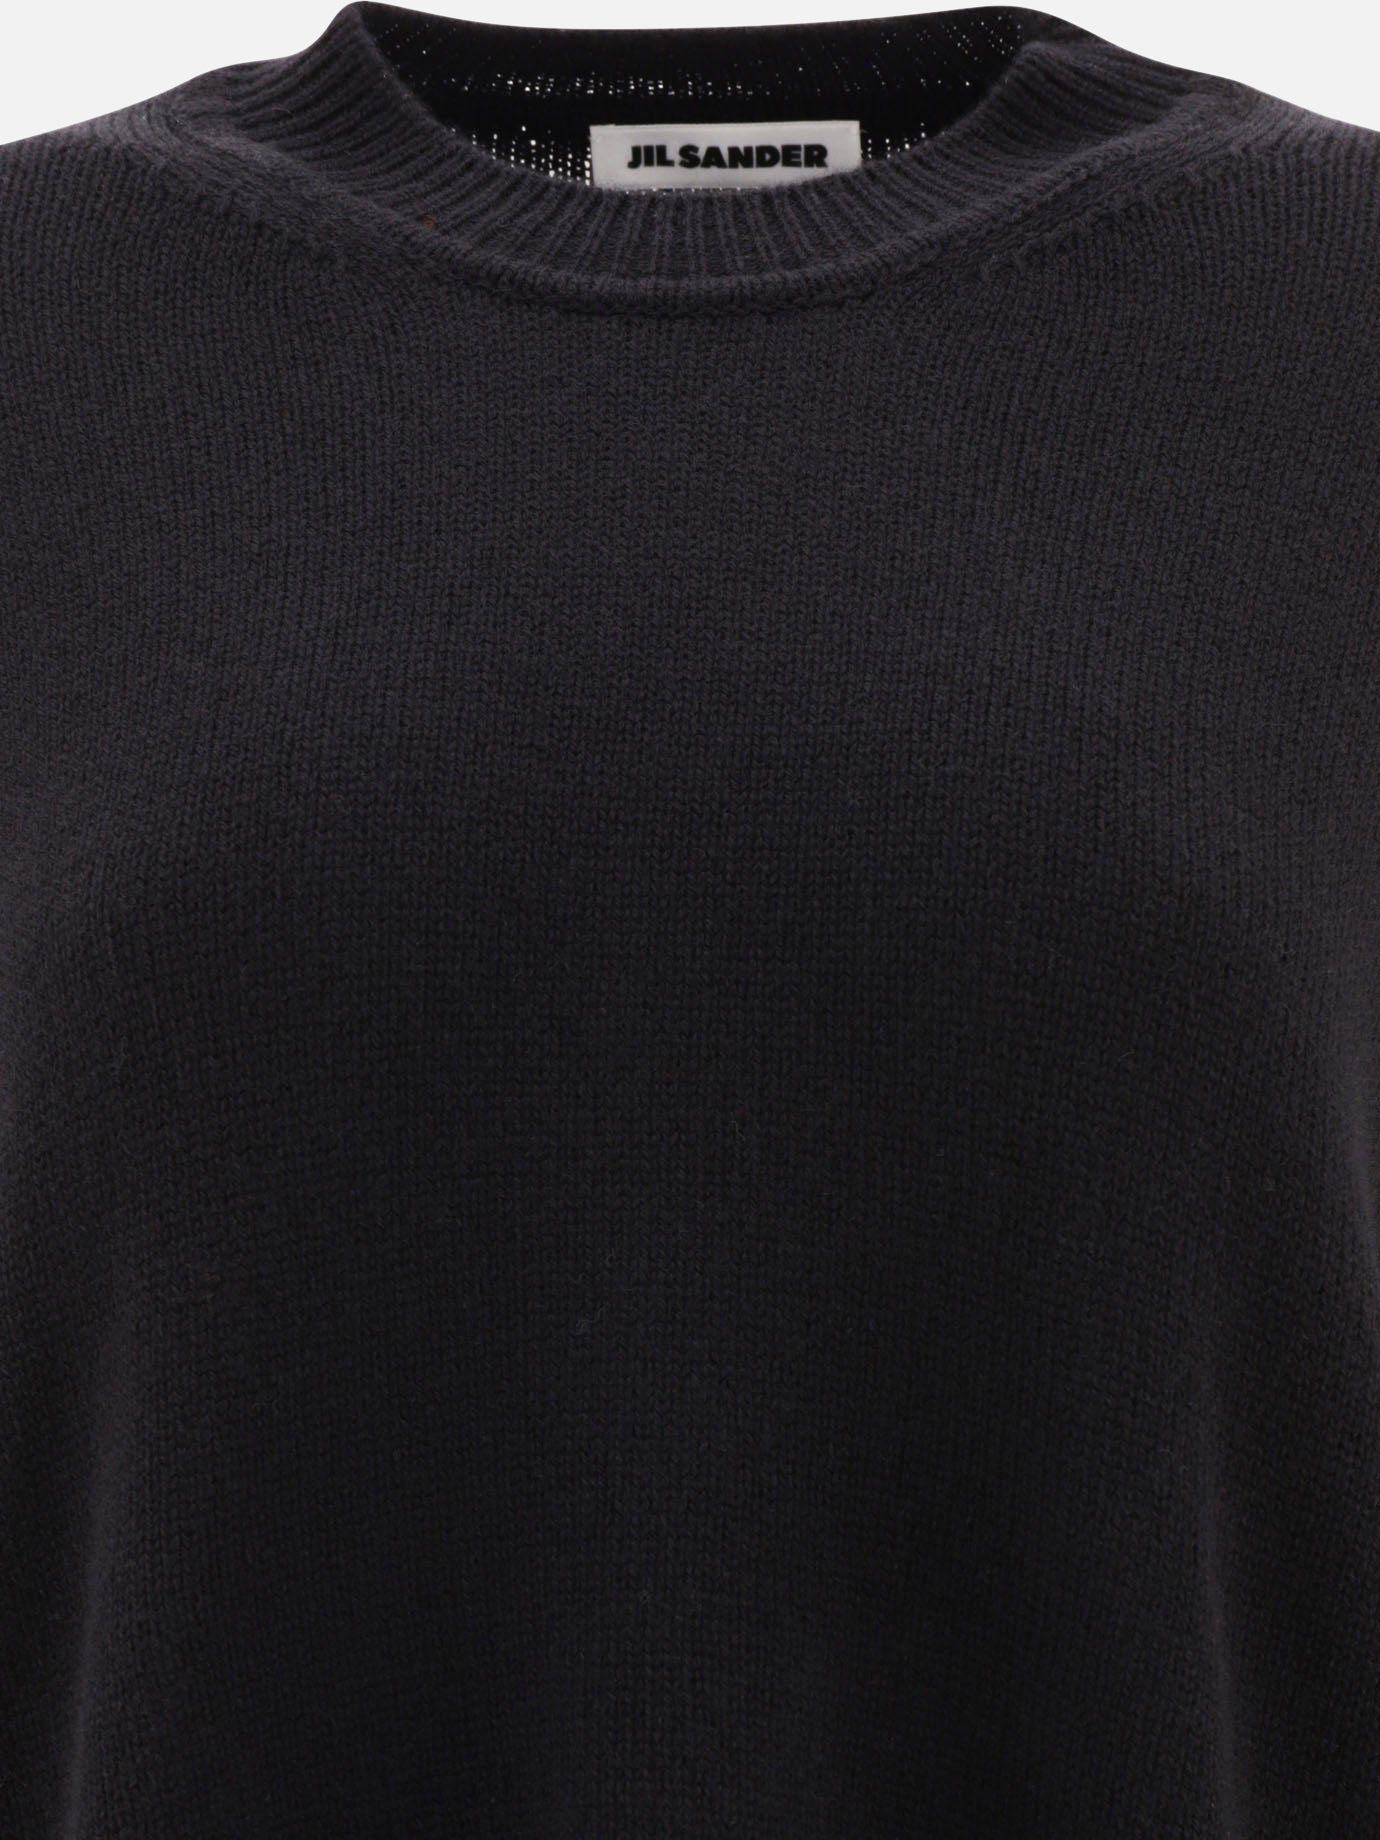 "Superfine Cashmere" sweater